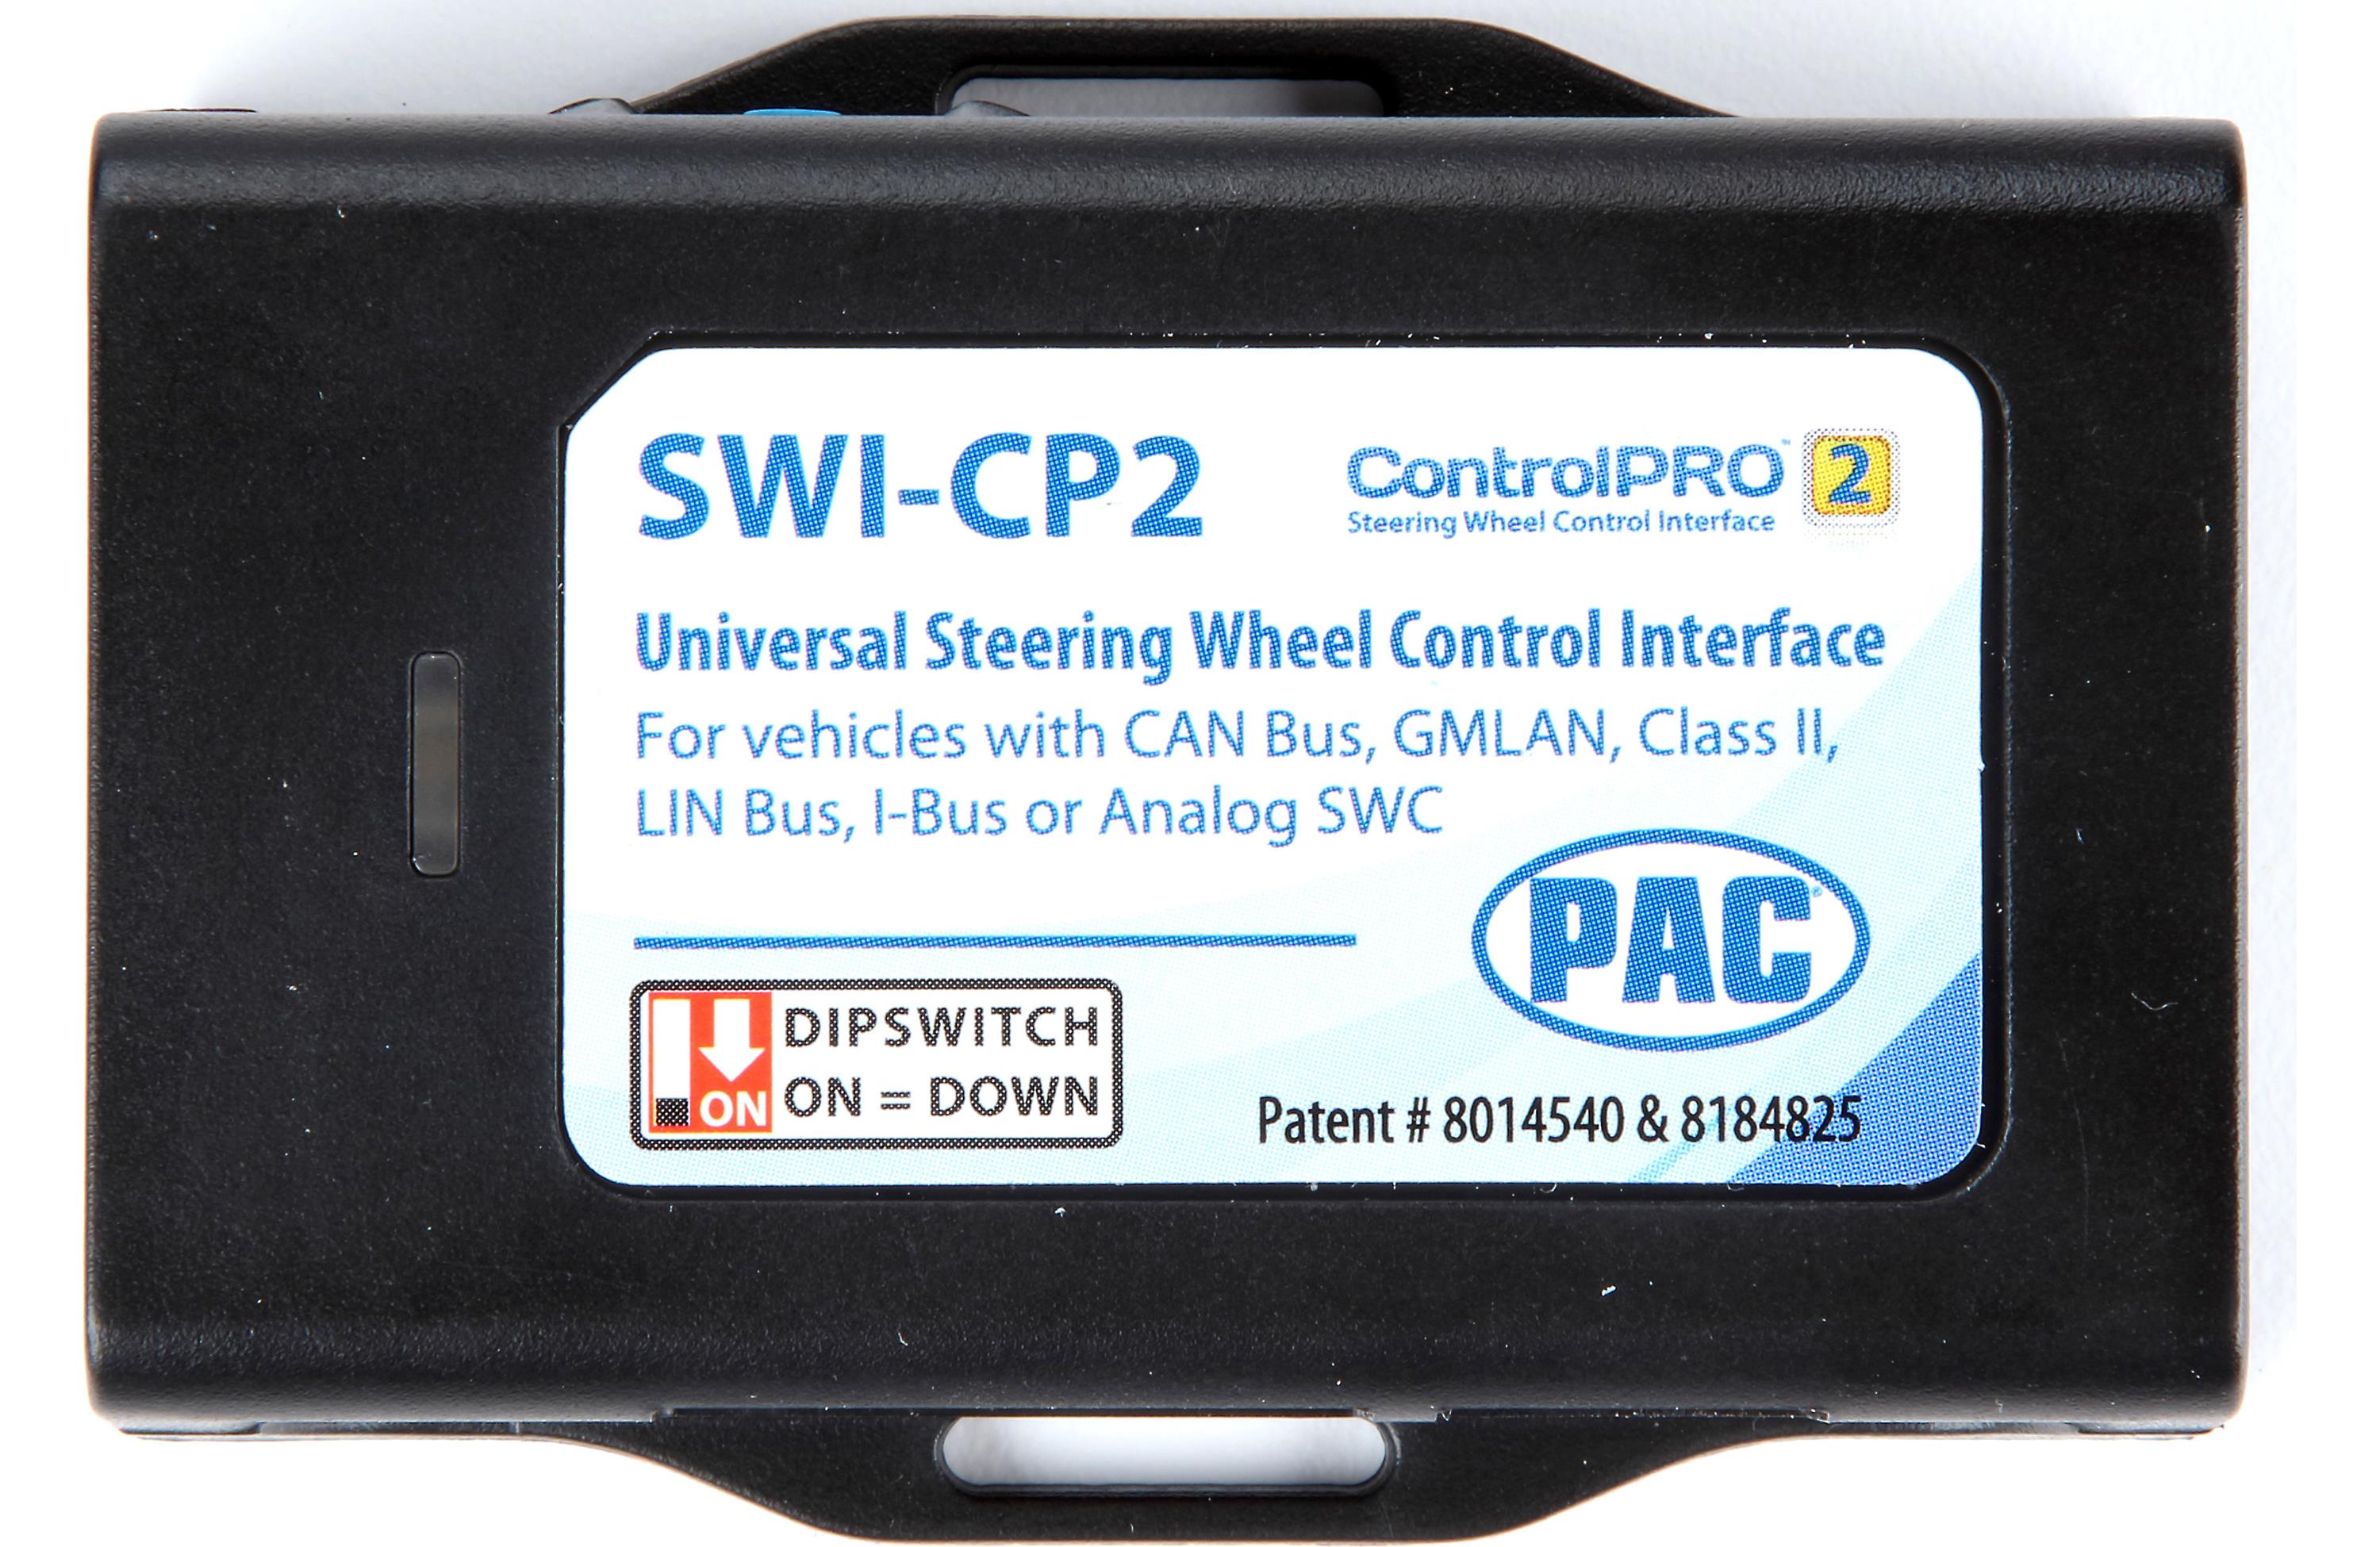 NEW PAC SWI-CP2 Universal Steering Wheel Control Interface SWICP2 